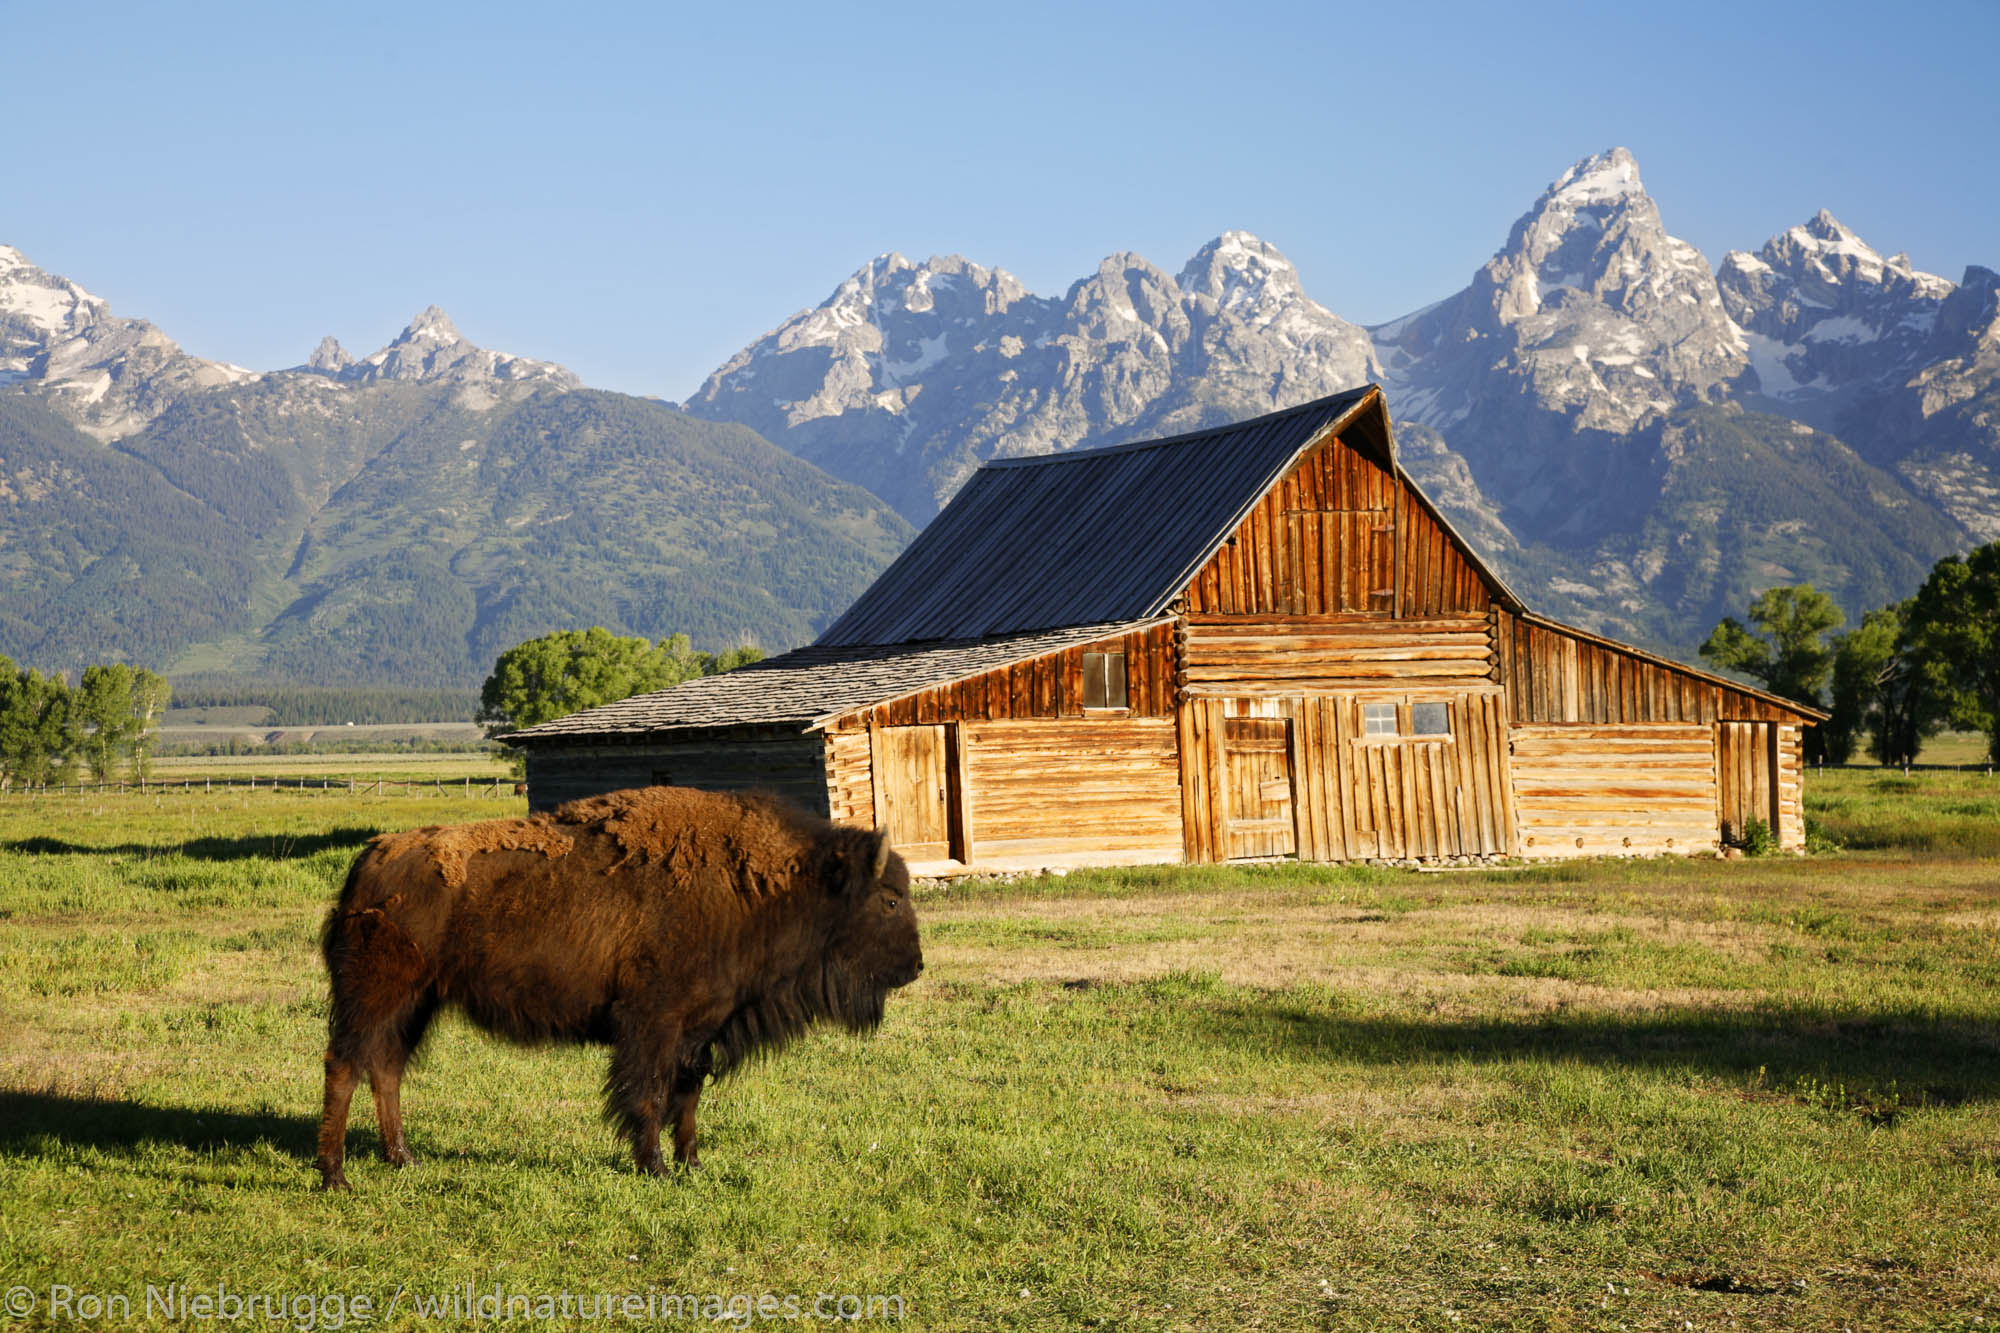 Buffalo in front of barn on Mormon Row, Grand Teton National Park, Wyoming.